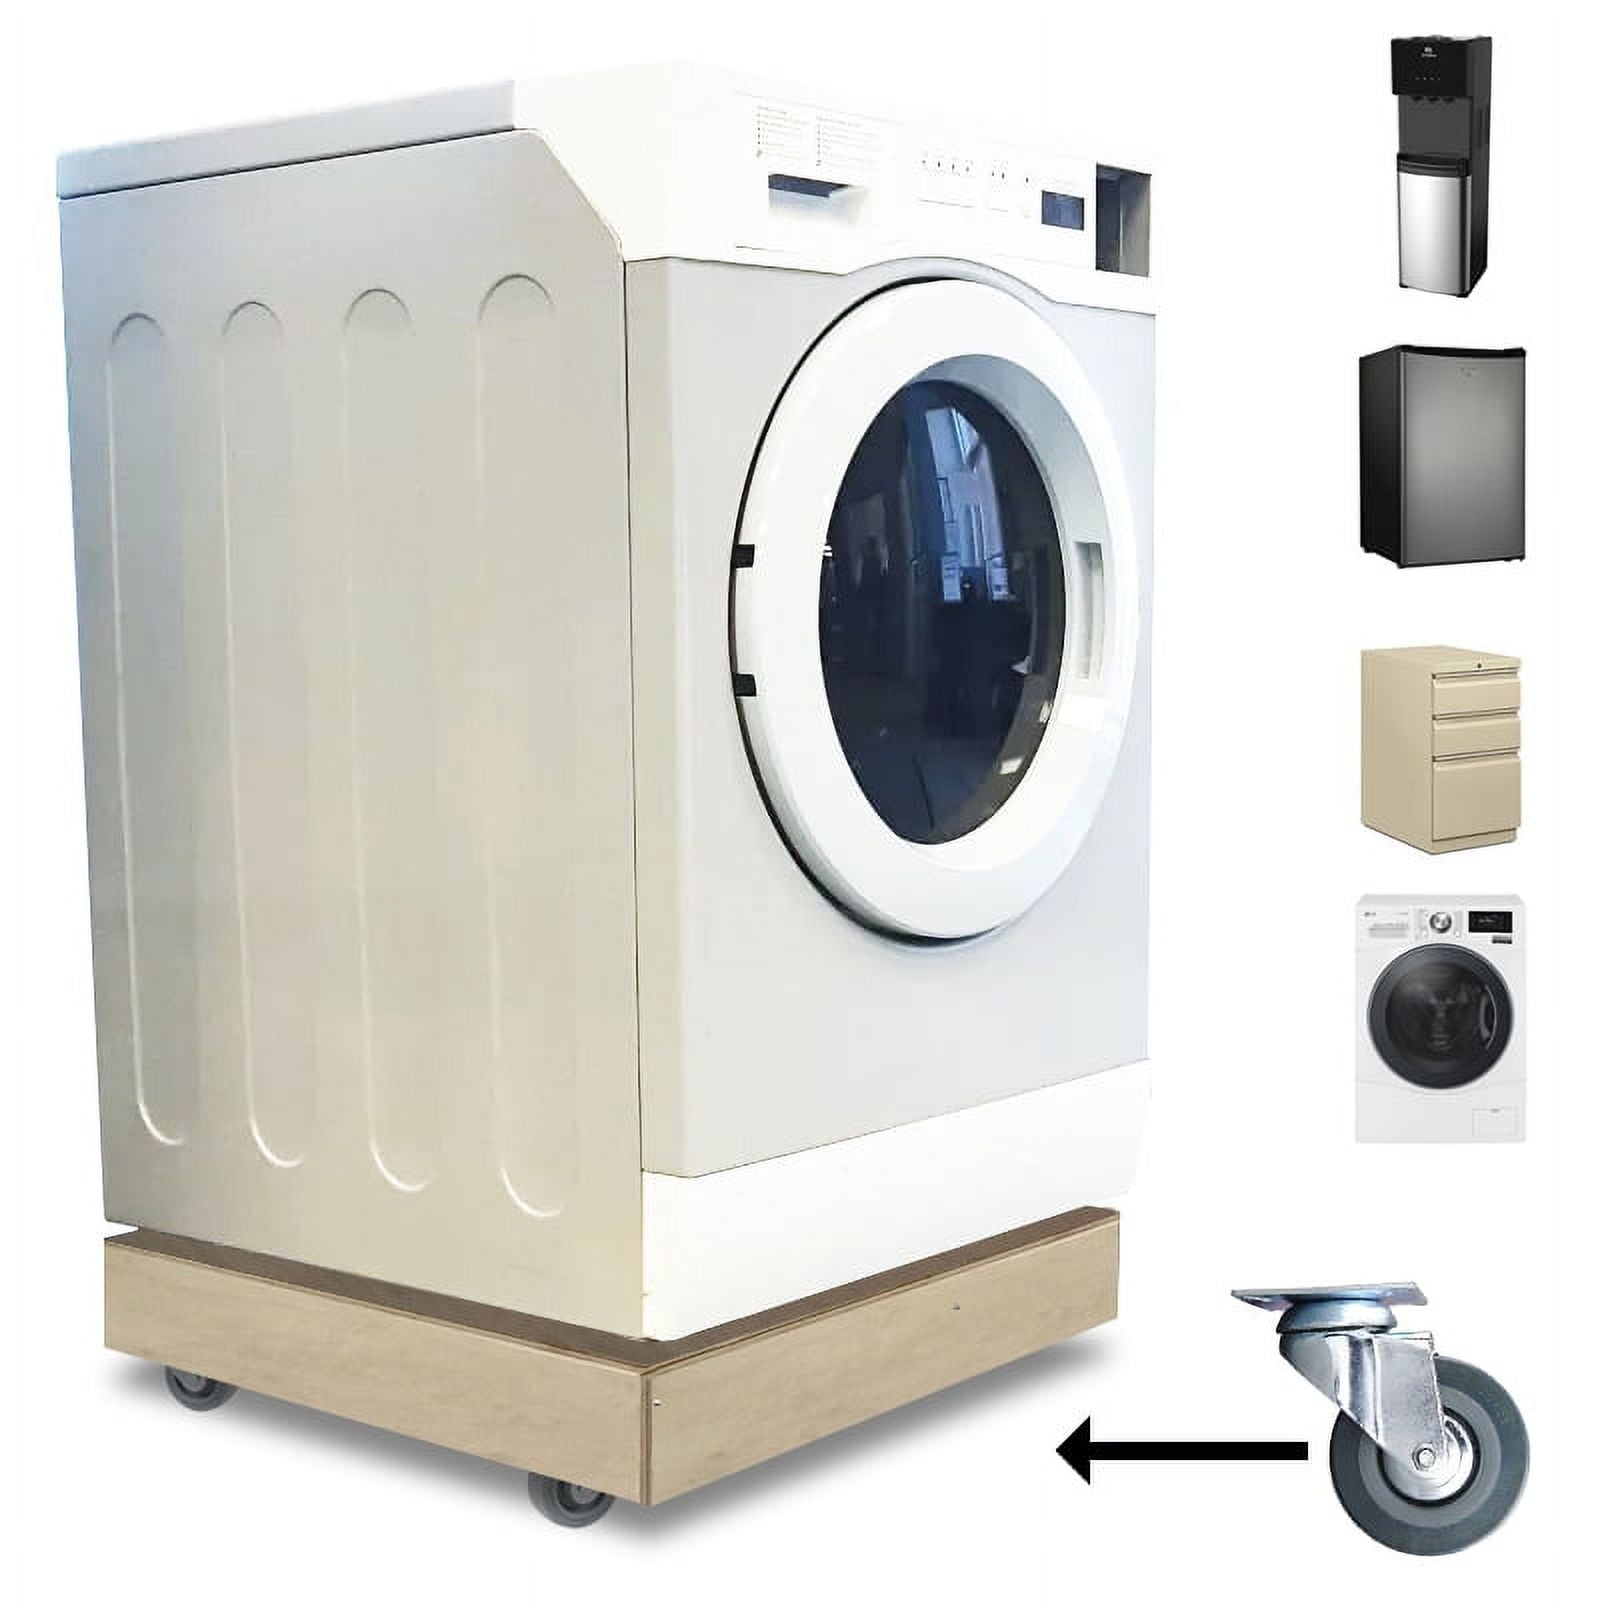 Portable Washer Dryer Stand Roller Washing Machine Dolly Pedestal